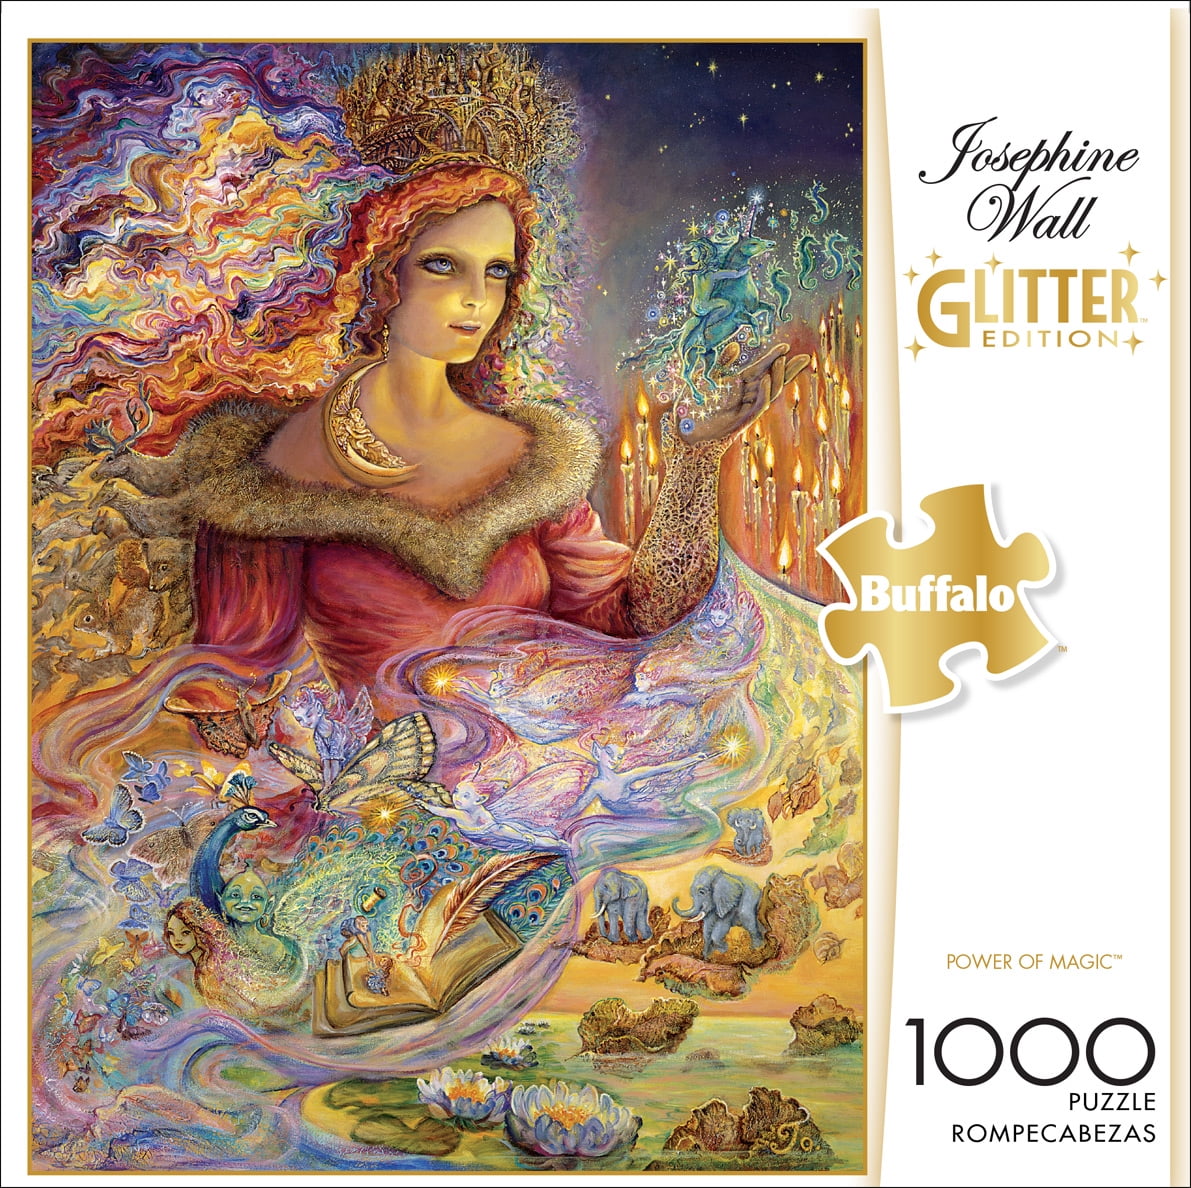 Flights of Fantasy Autumn Queen Glitter Edition 1000 Piece Jigsaw Puzzle 